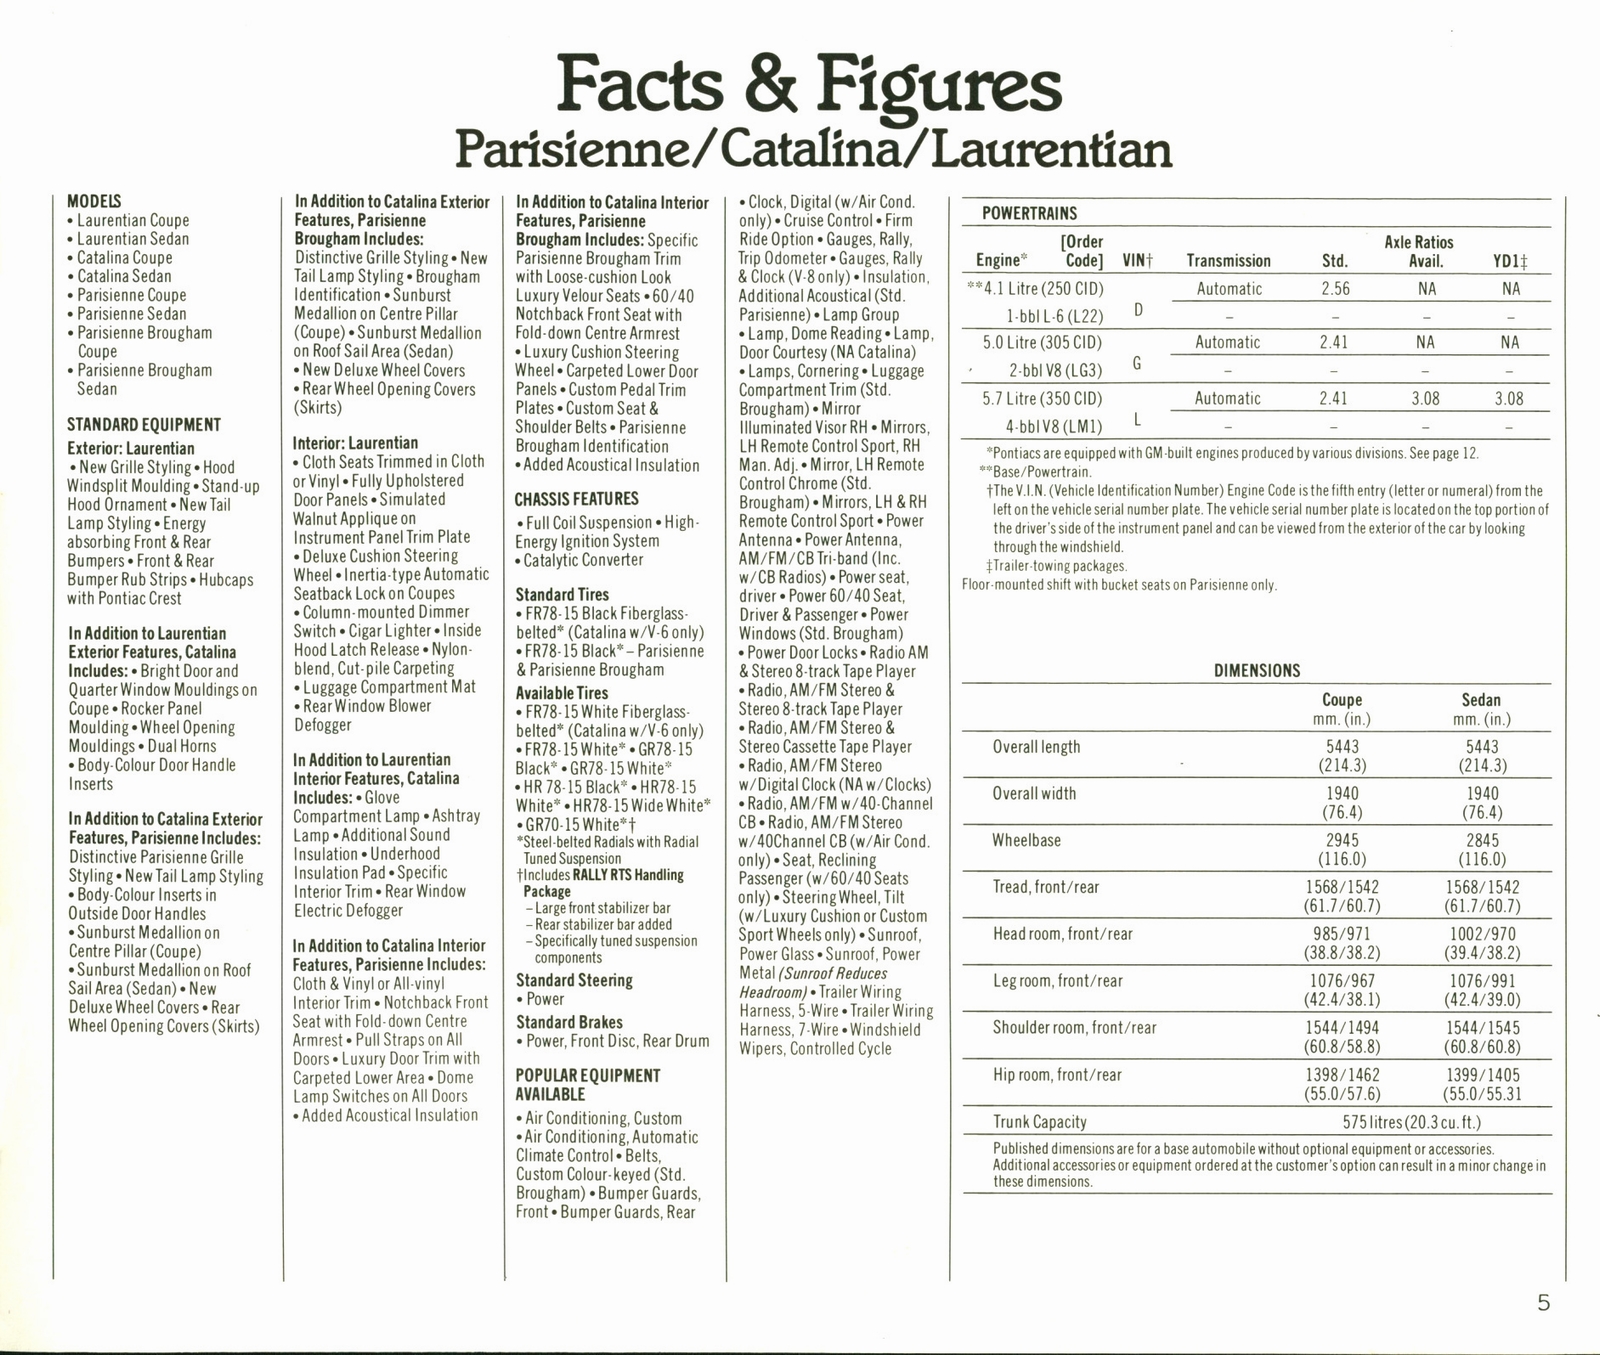 n_1979 Pontiac Buyers Guide (Cdn)-05.jpg